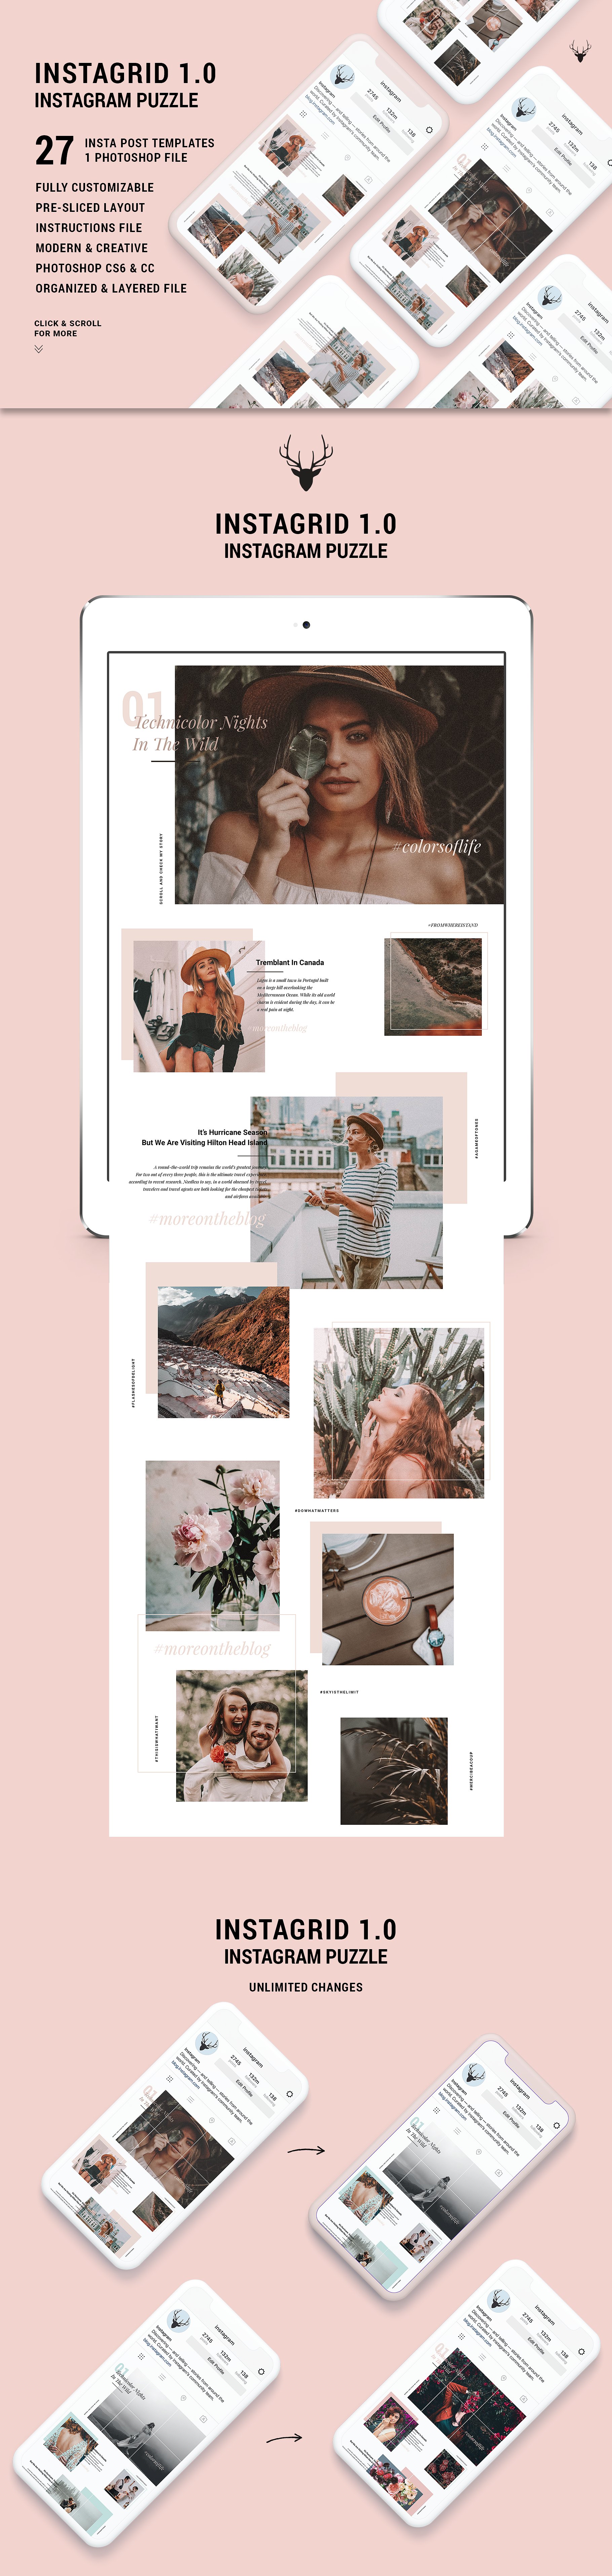 9.6G 现代时尚圣诞节新年女性服装摄影海报Instagram模板集合 MegaBundle Items From 2018插图16